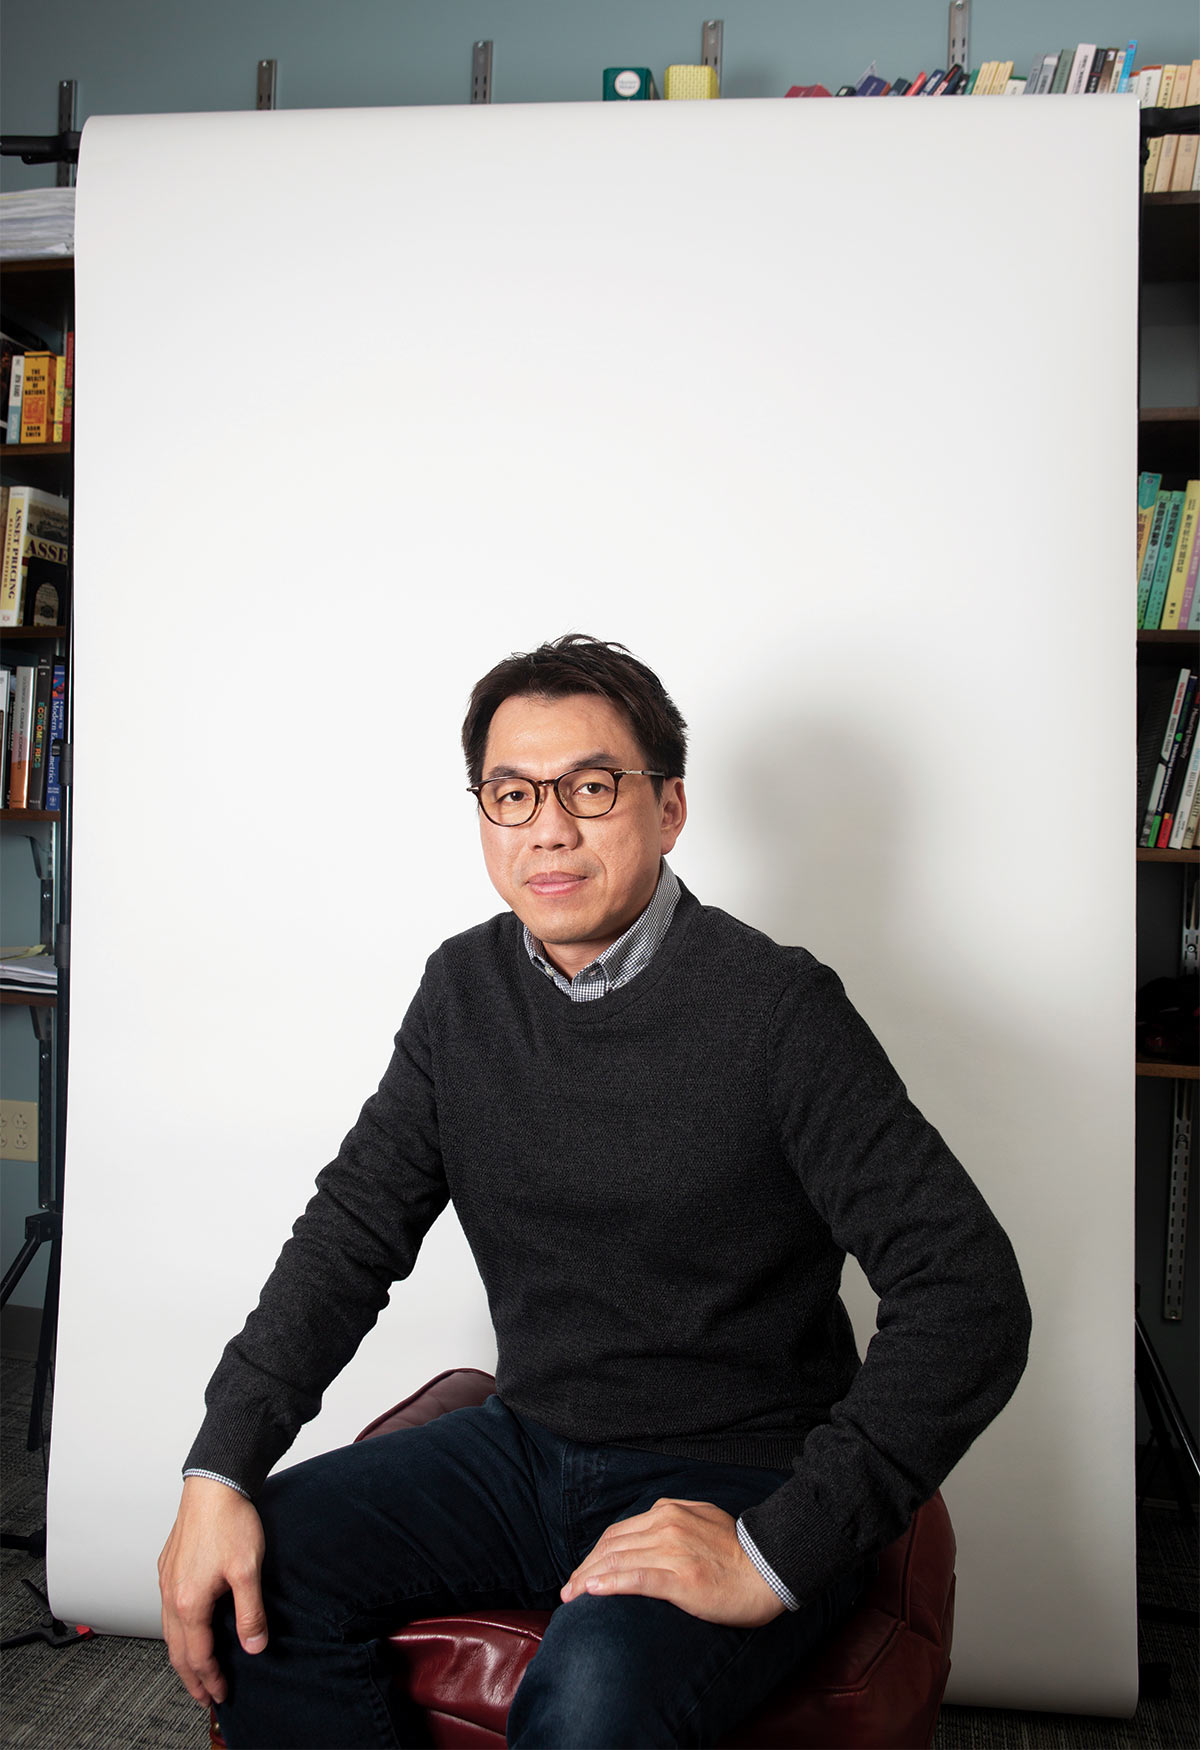 Professor Carl Lin in front of white backdrop